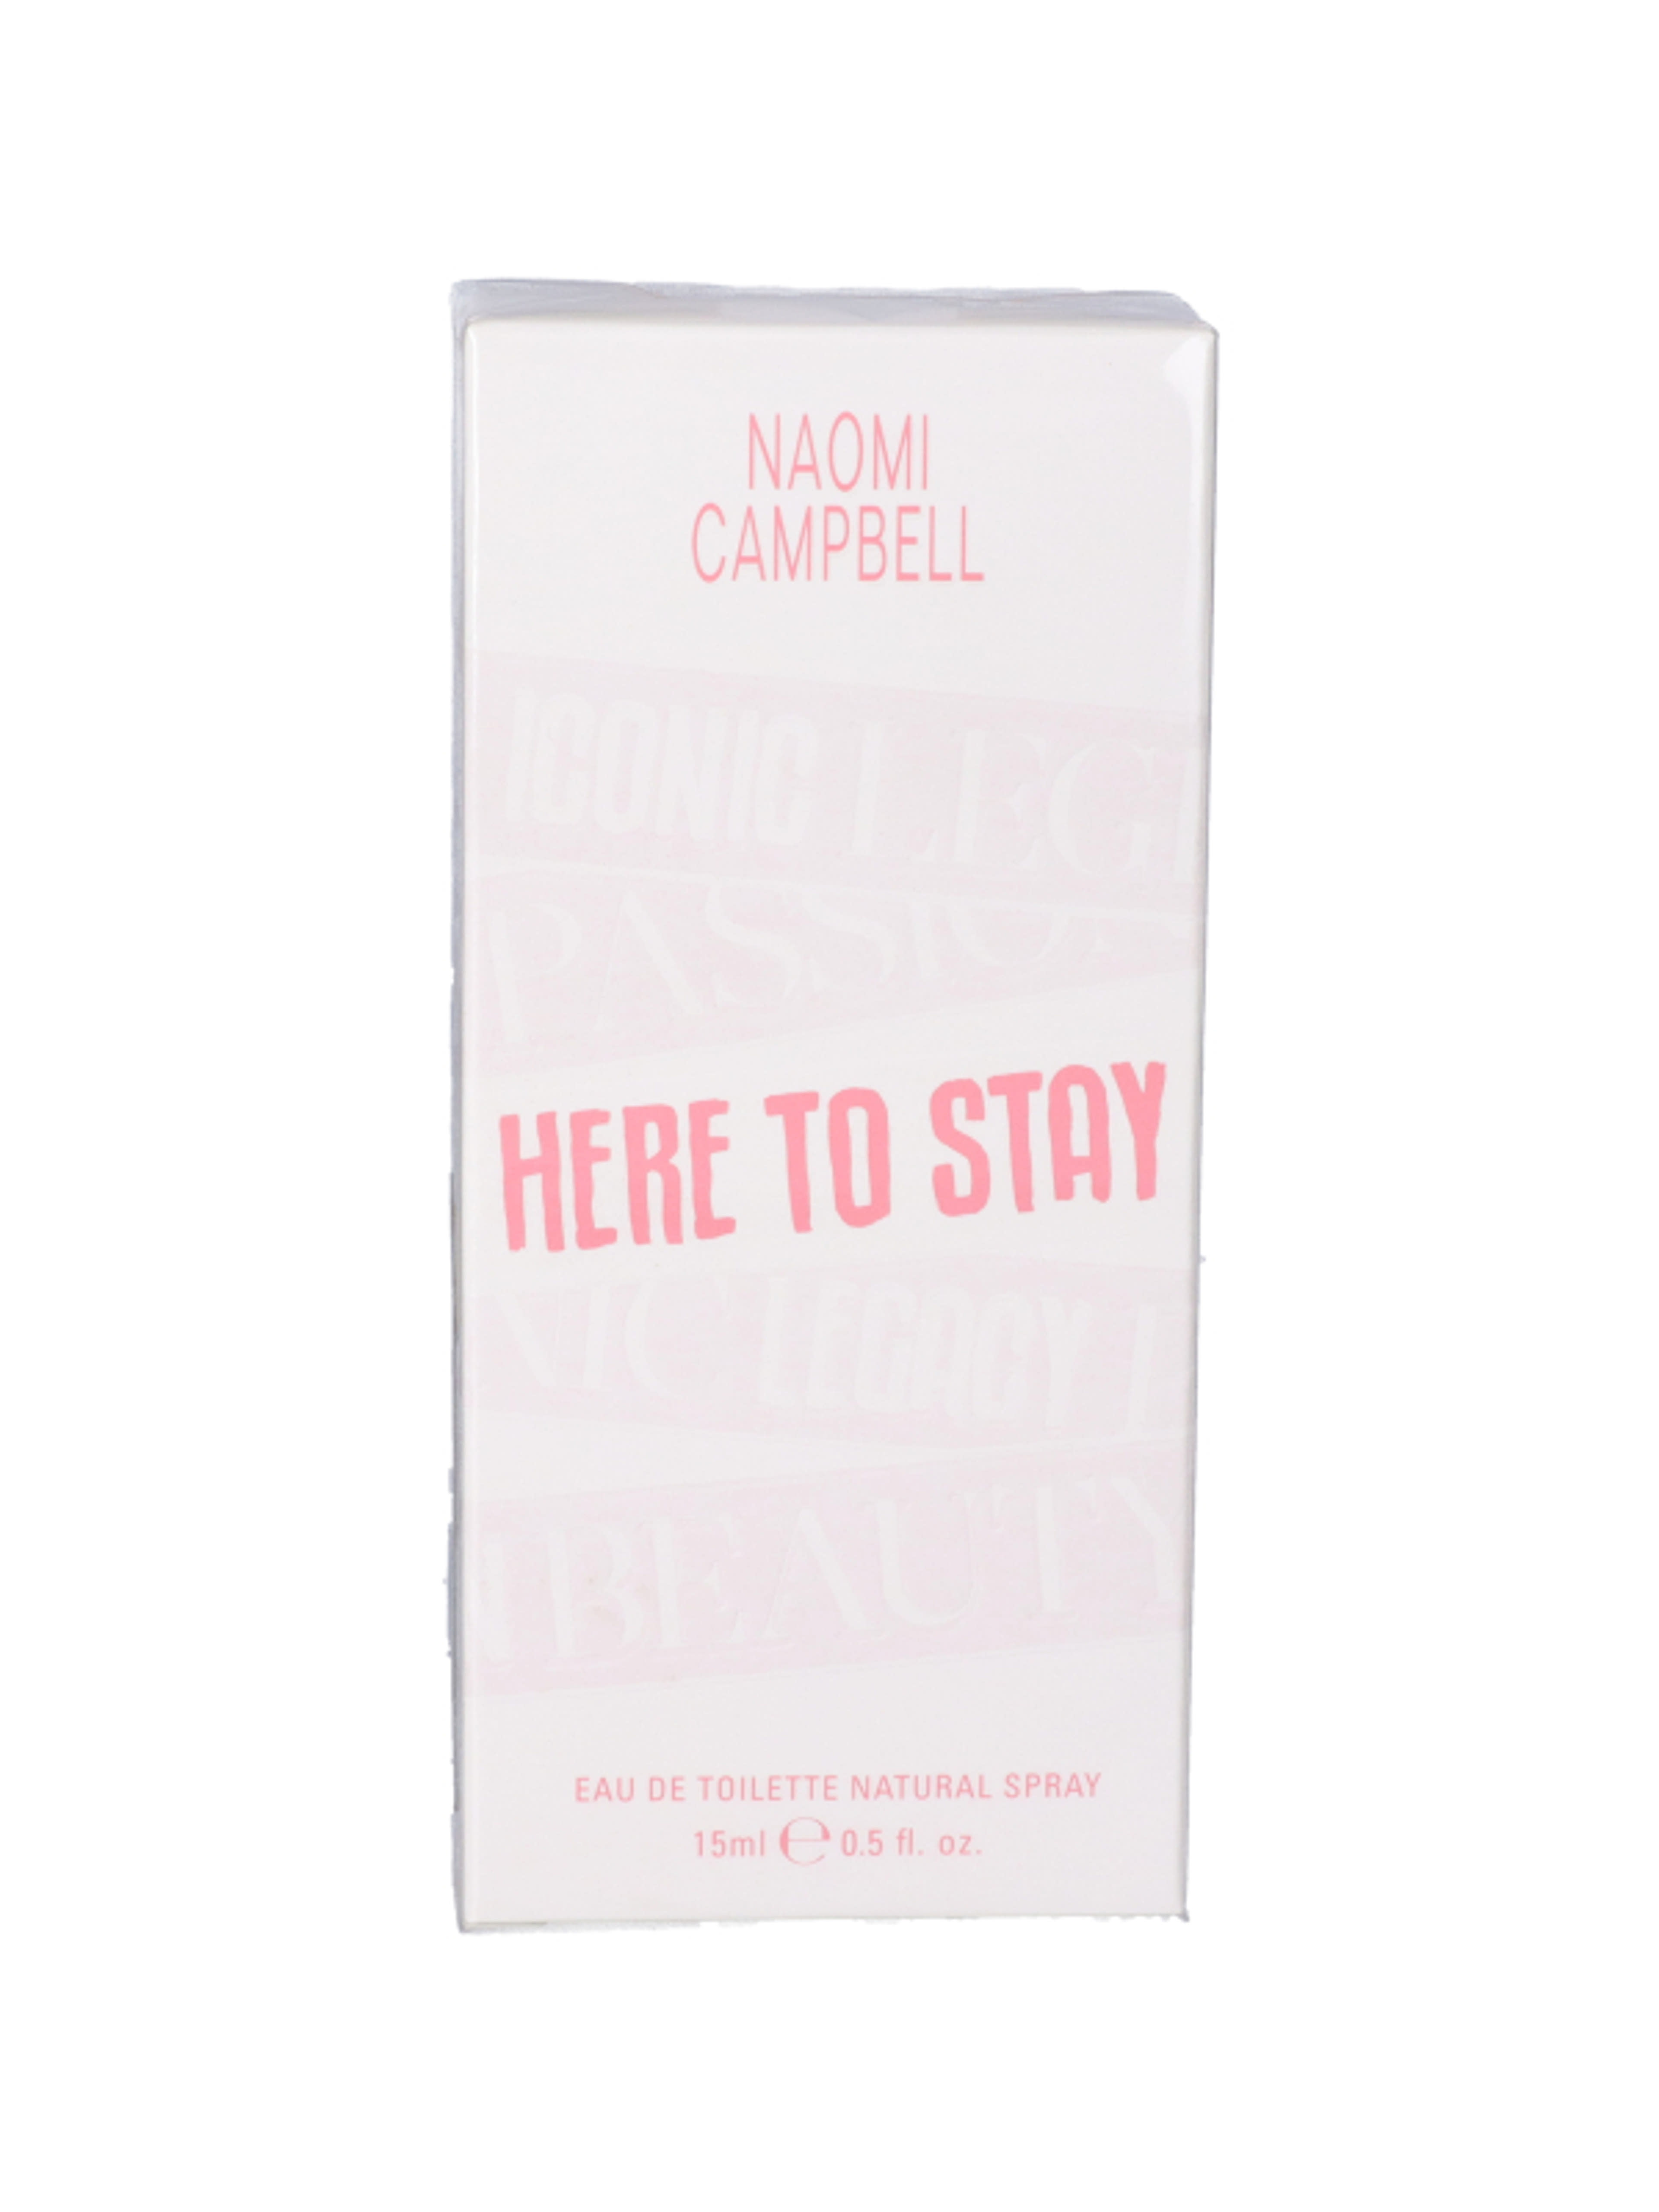 Naomi Campbell Here to Stay noi eau de toilette - 15 ml-1